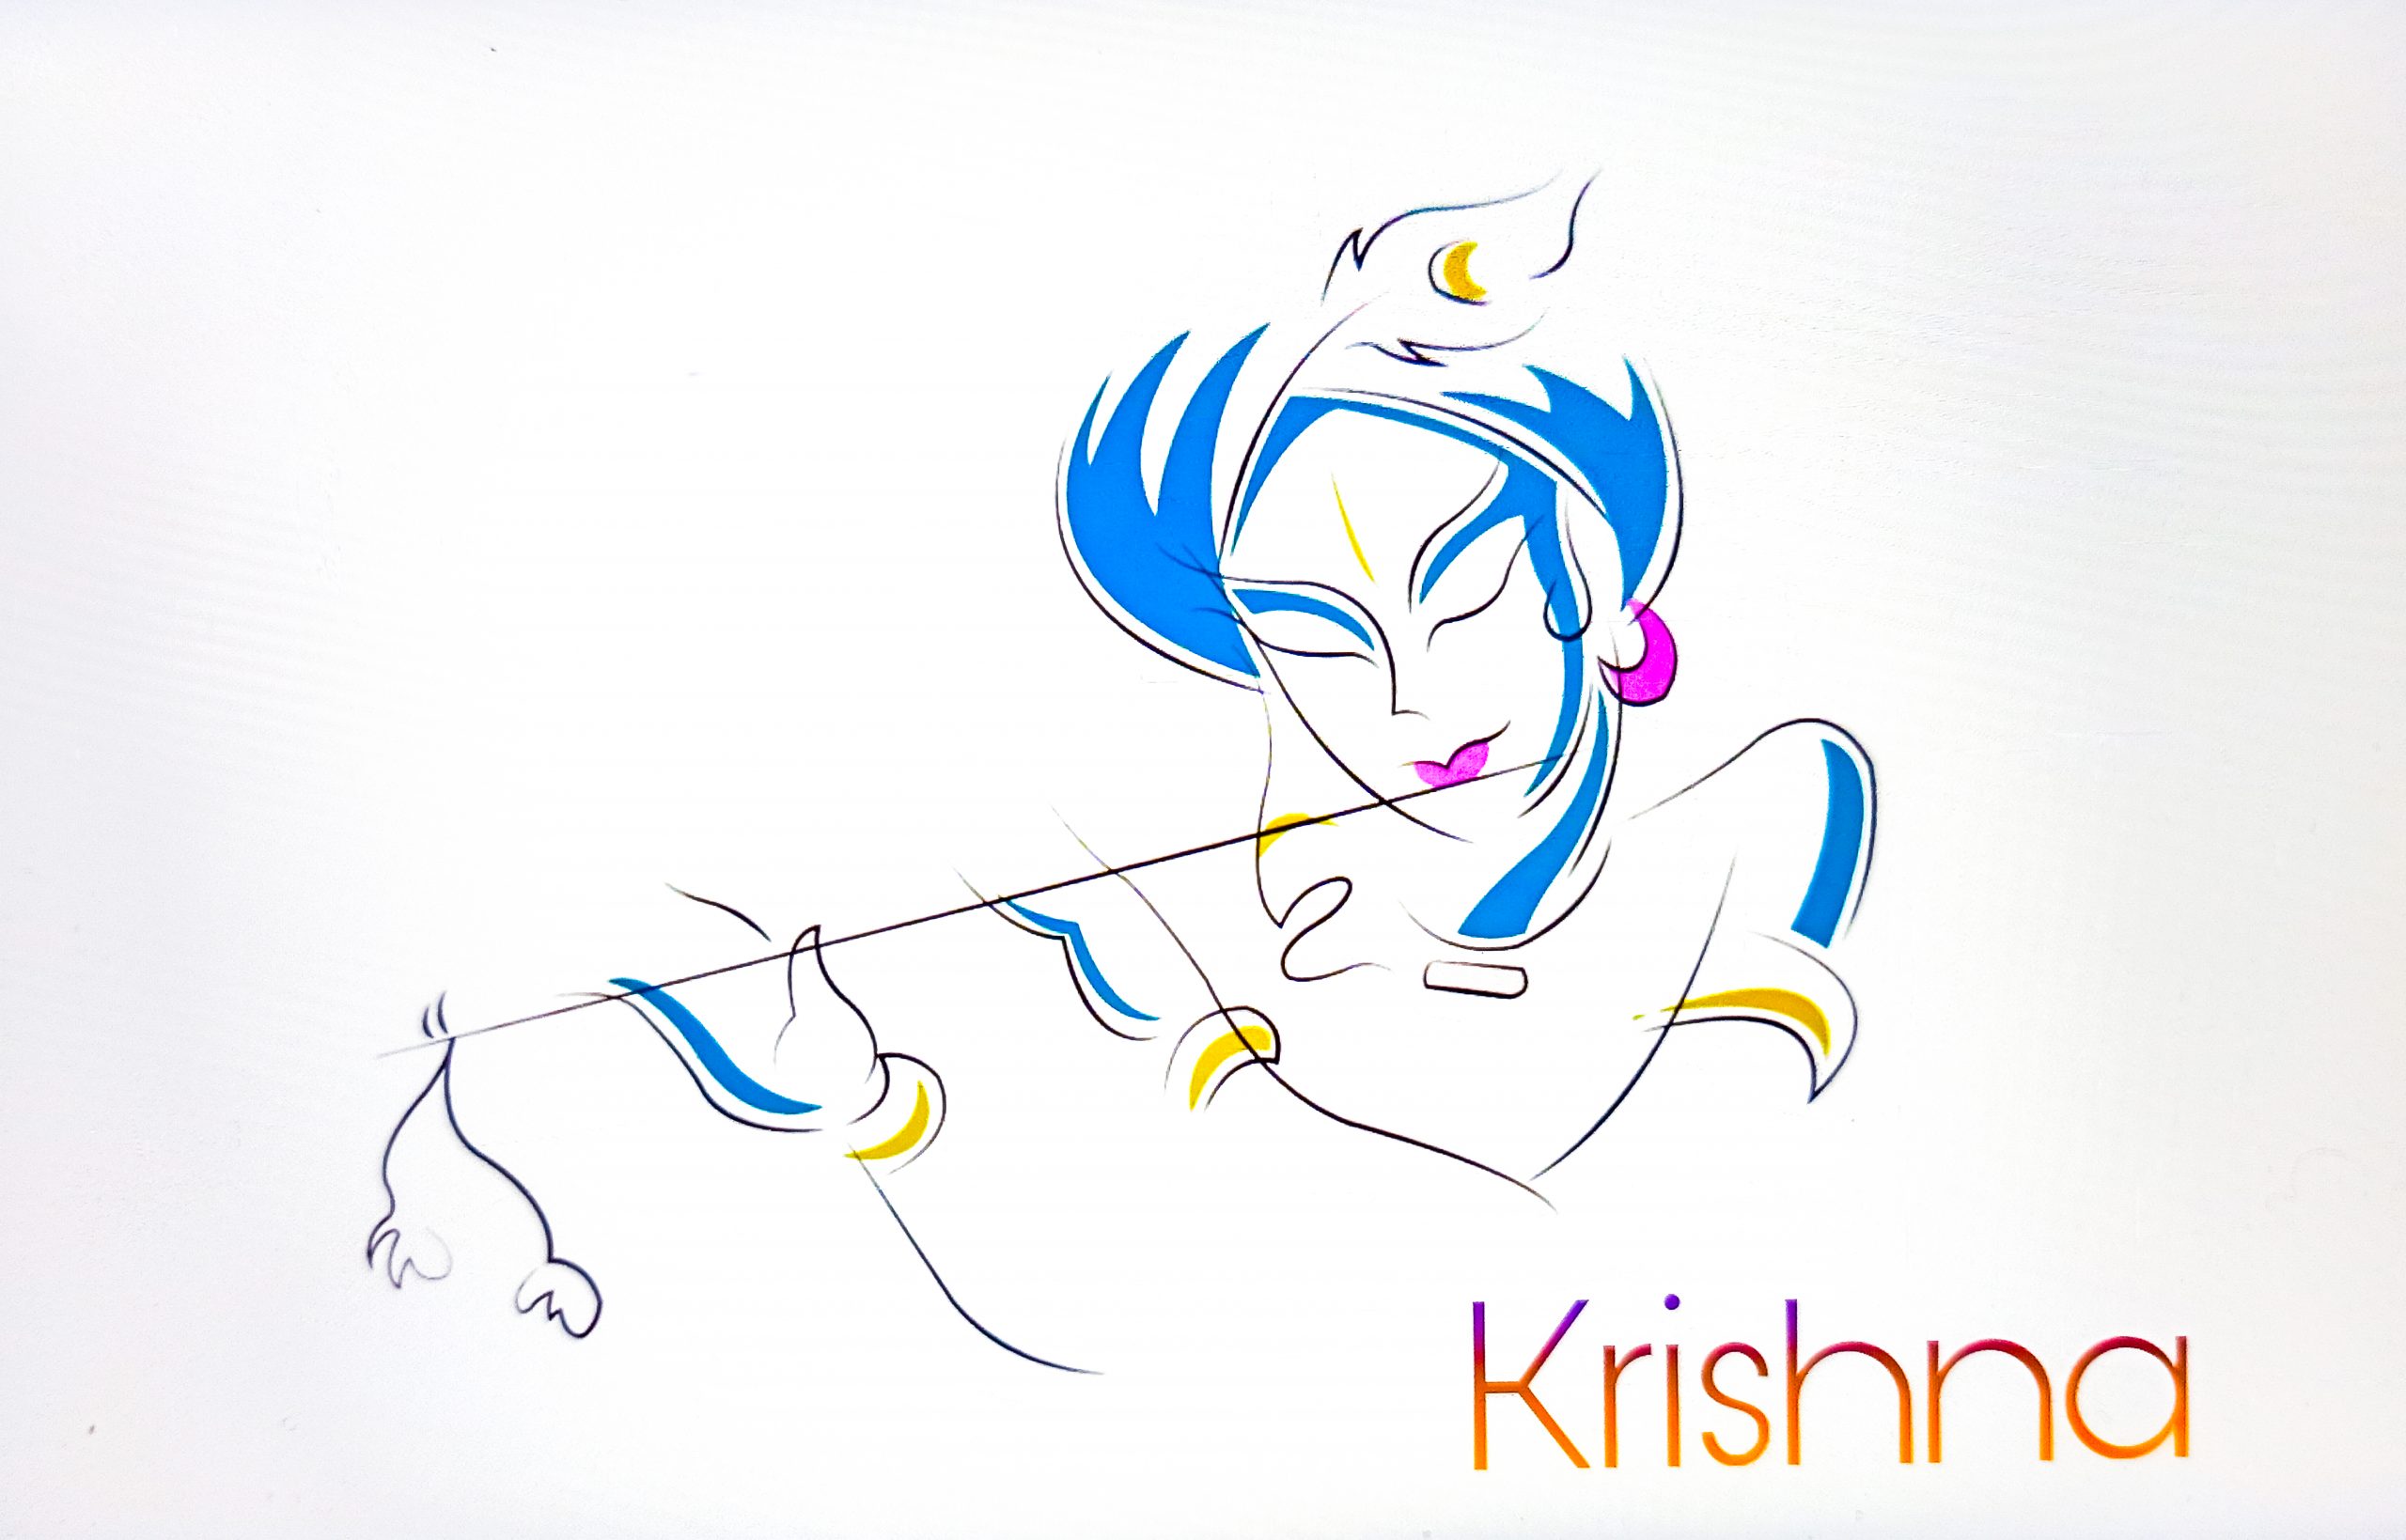 Lord Krishna illustration